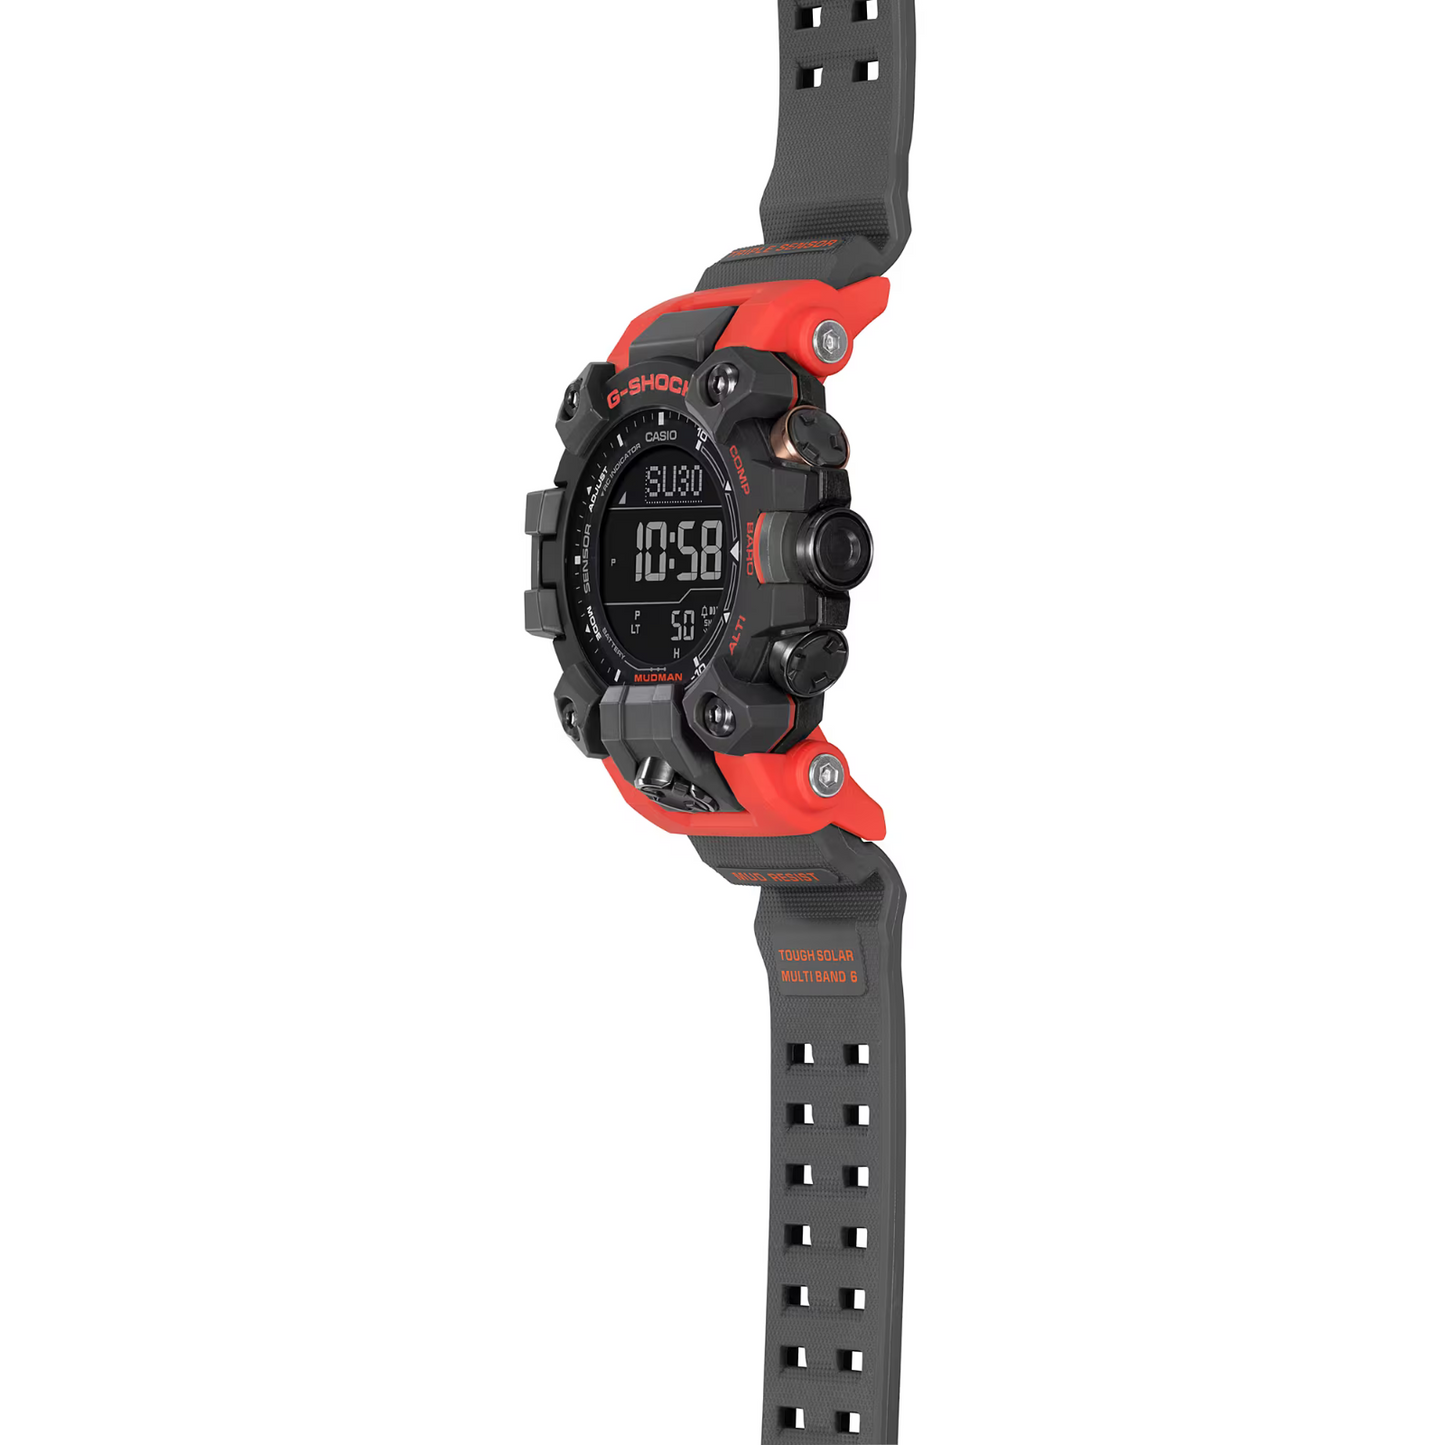 Casio G-Shock Master Of G Mudman Black And Red Resin Solar Watch GW-9500-1A4